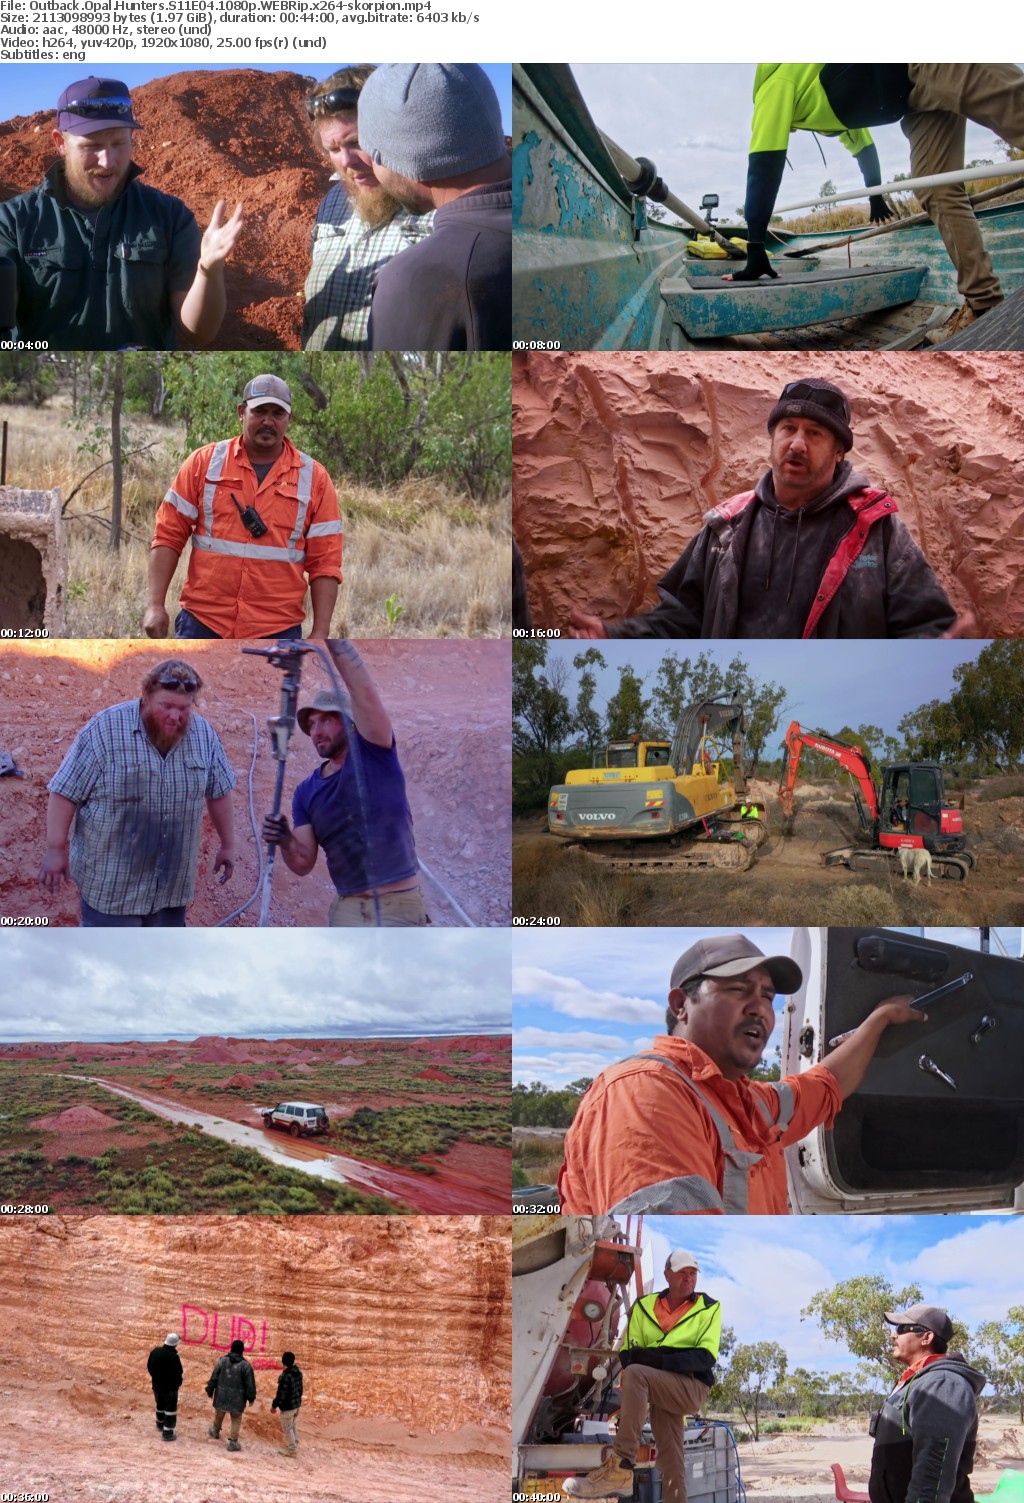 Outback Opal Hunters S11E04 1080p WEBRip x264-skorpion mp4